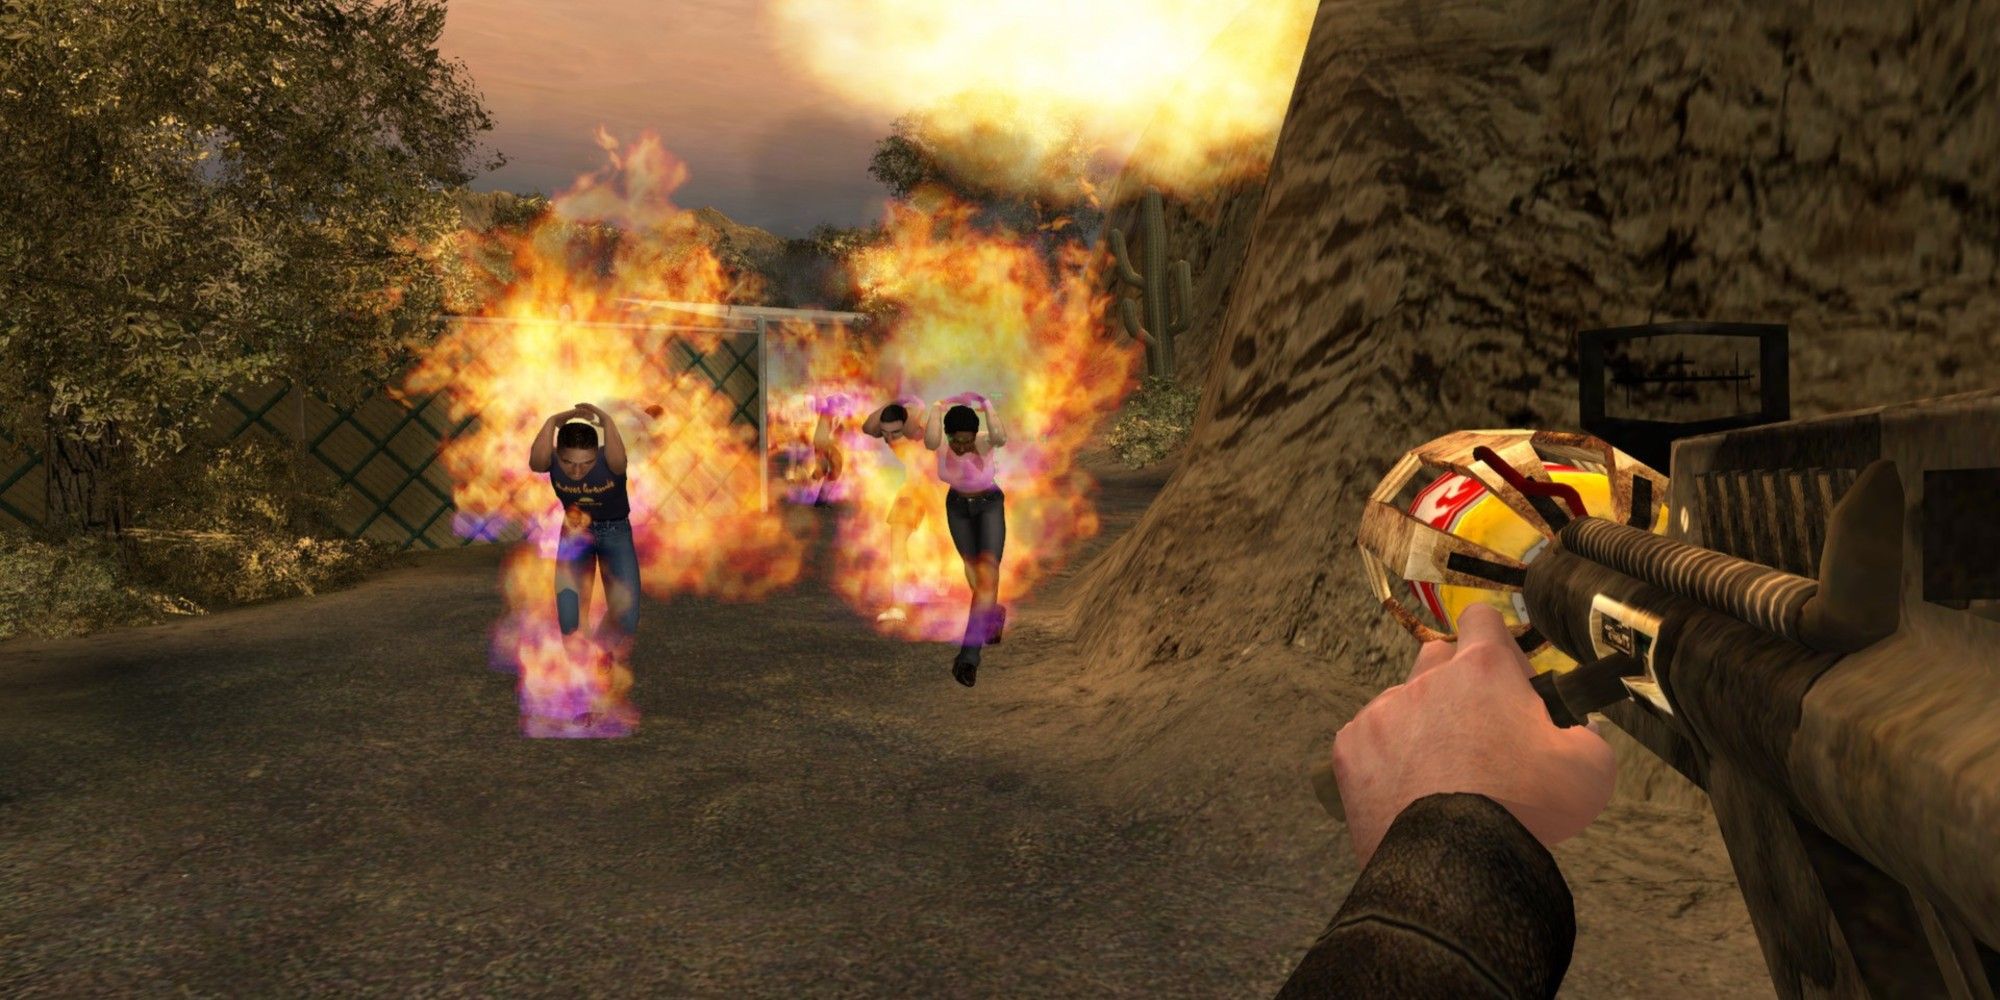 video game character setting npcs on fire